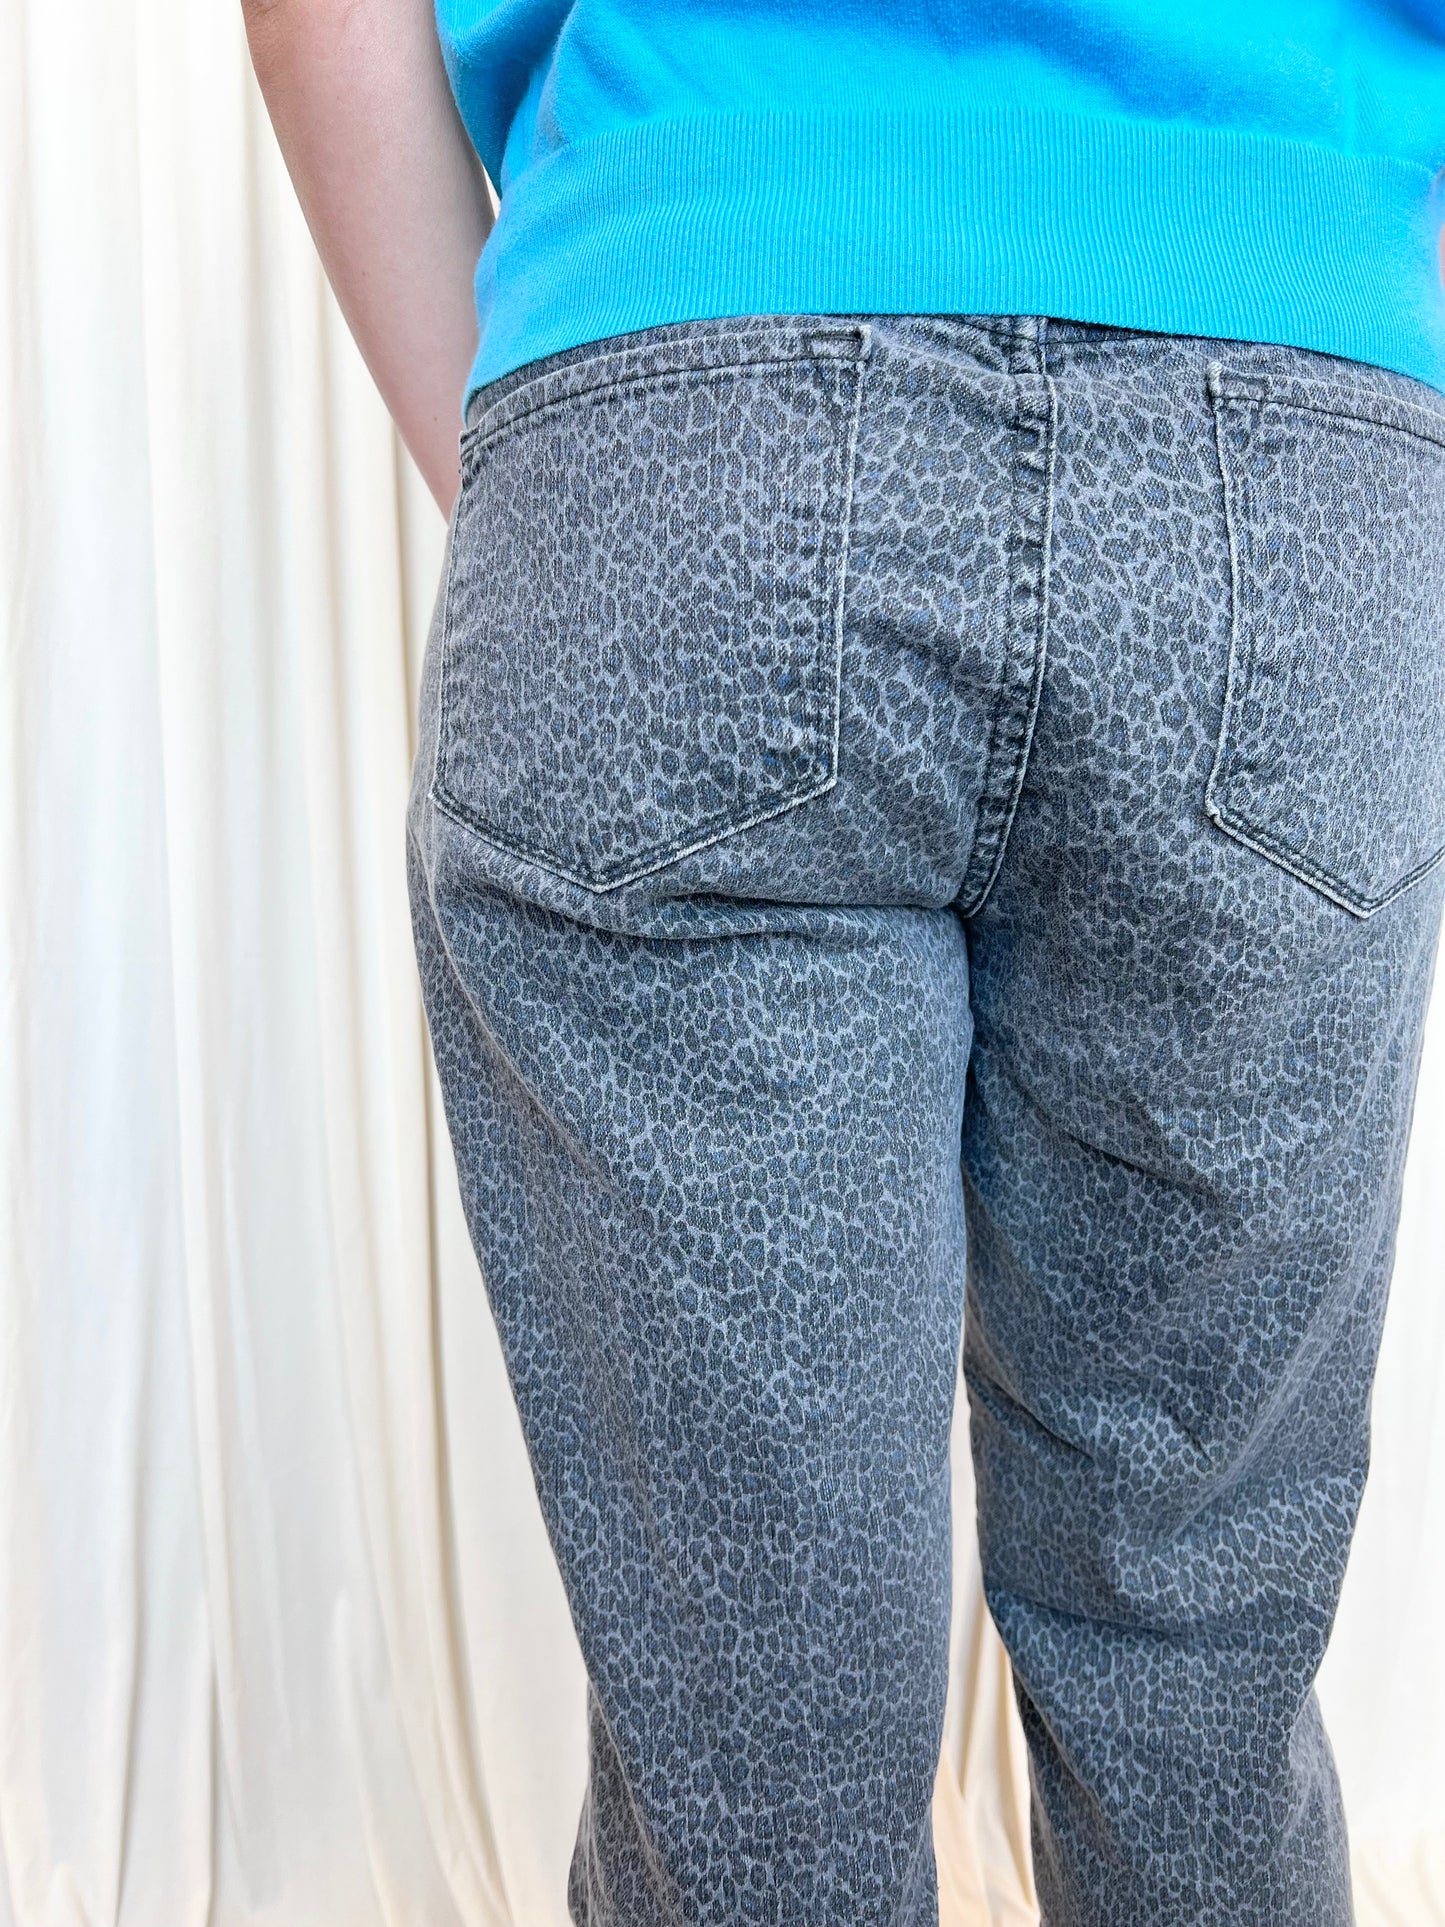 Gray Leopard Print Jeans - 6